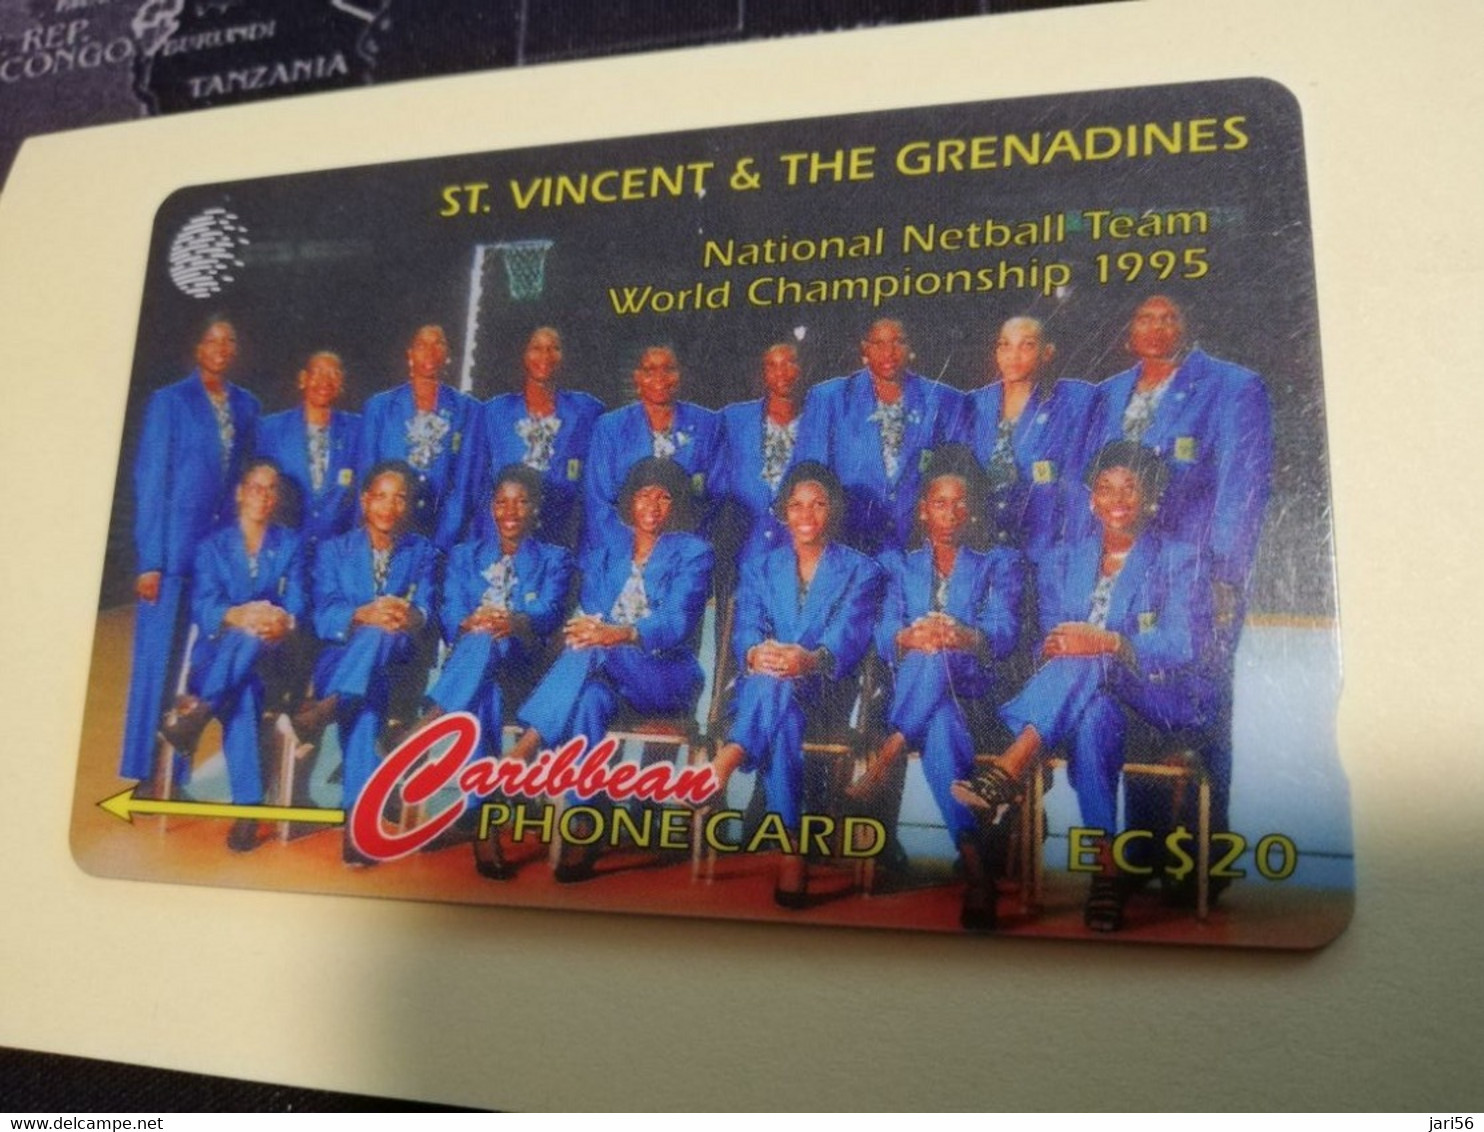 ST VINCENT & GRENADINES  GPT CARD   $ 20,- 243CSVB   NETBALL TEAM 1995        C&W    Fine Used  Card  **3401** - St. Vincent & The Grenadines